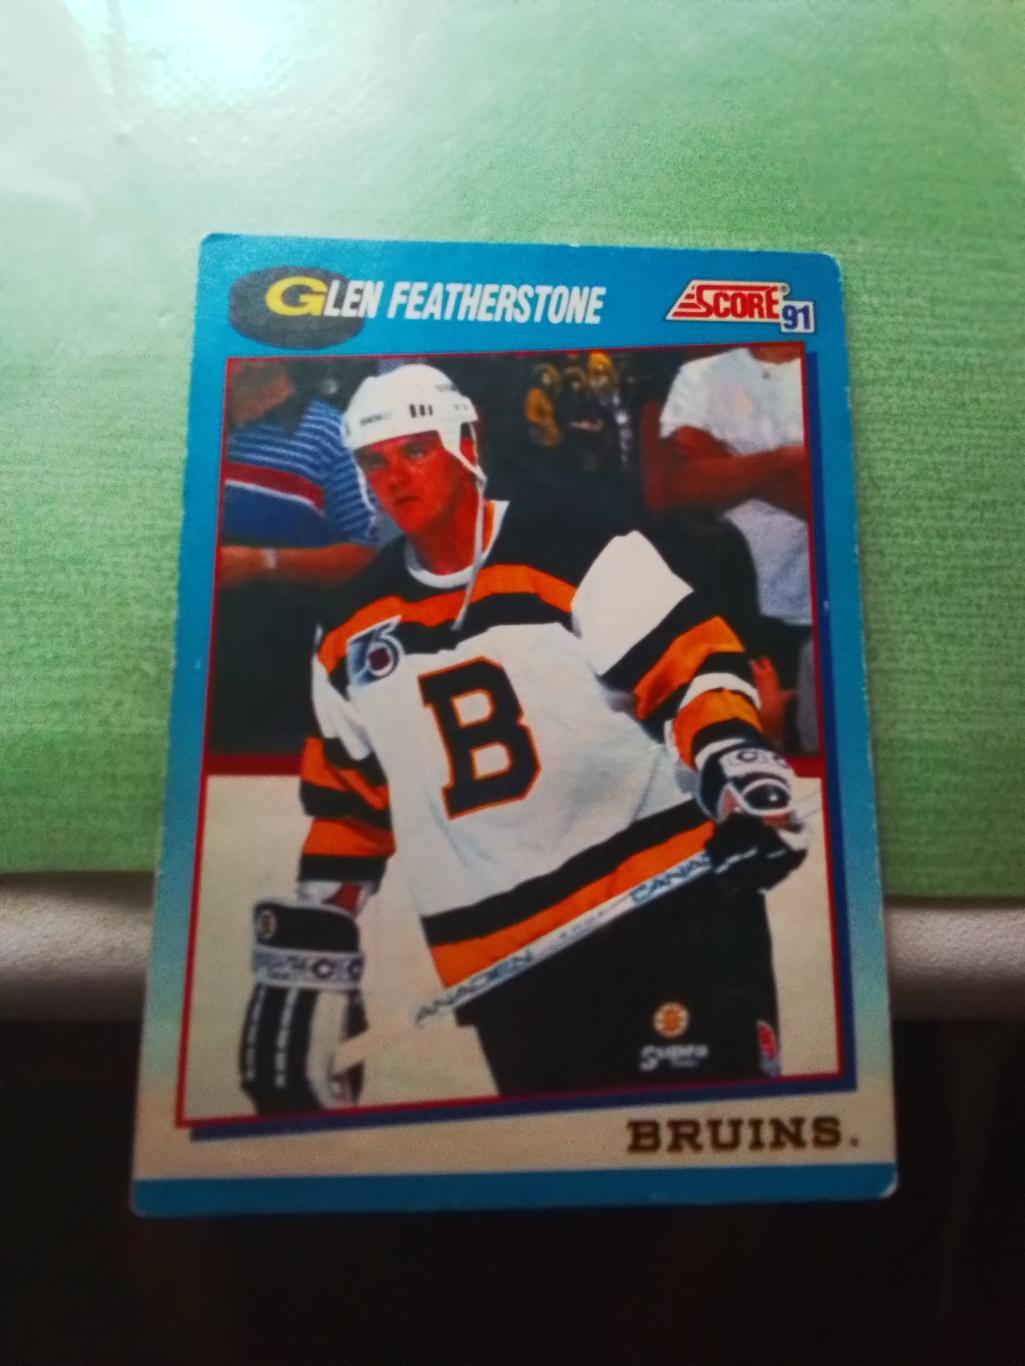 Хоккей Карточка НХЛ SCORE 91 1991 -92 NHL Glen Featherstone Boston Bruins # 587